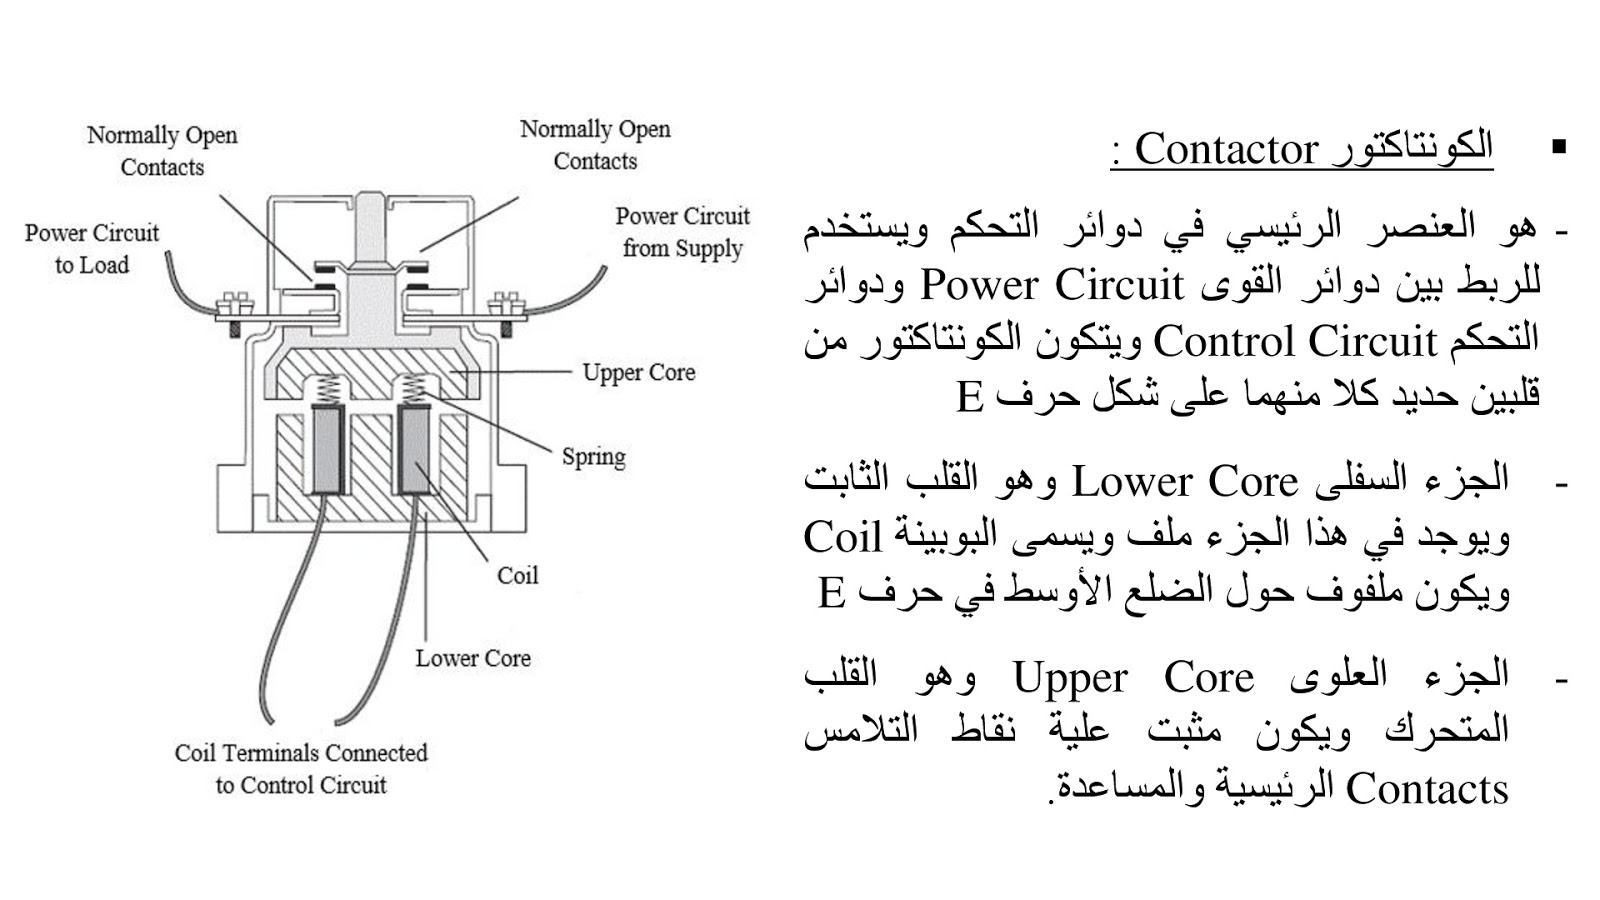 كورس كلاسيك كنترول فرقة اولي باور هندسة الشروق كاملا Course Classic Control 1st Power Engineering Elshrouk academy full